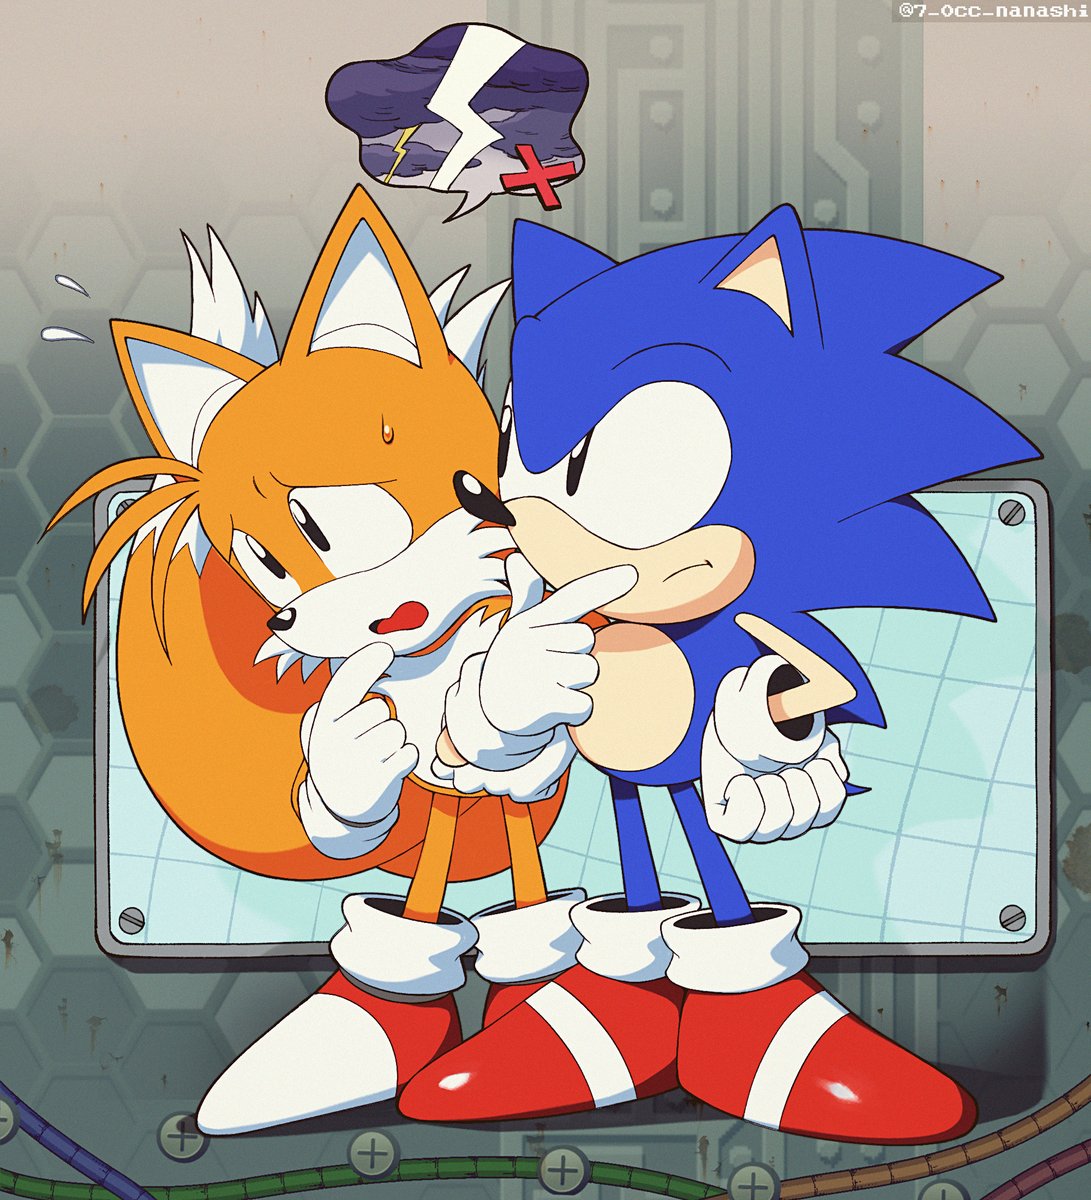 OVAのふたり
#SonicTheHedgehog
#MilesTailsPrower